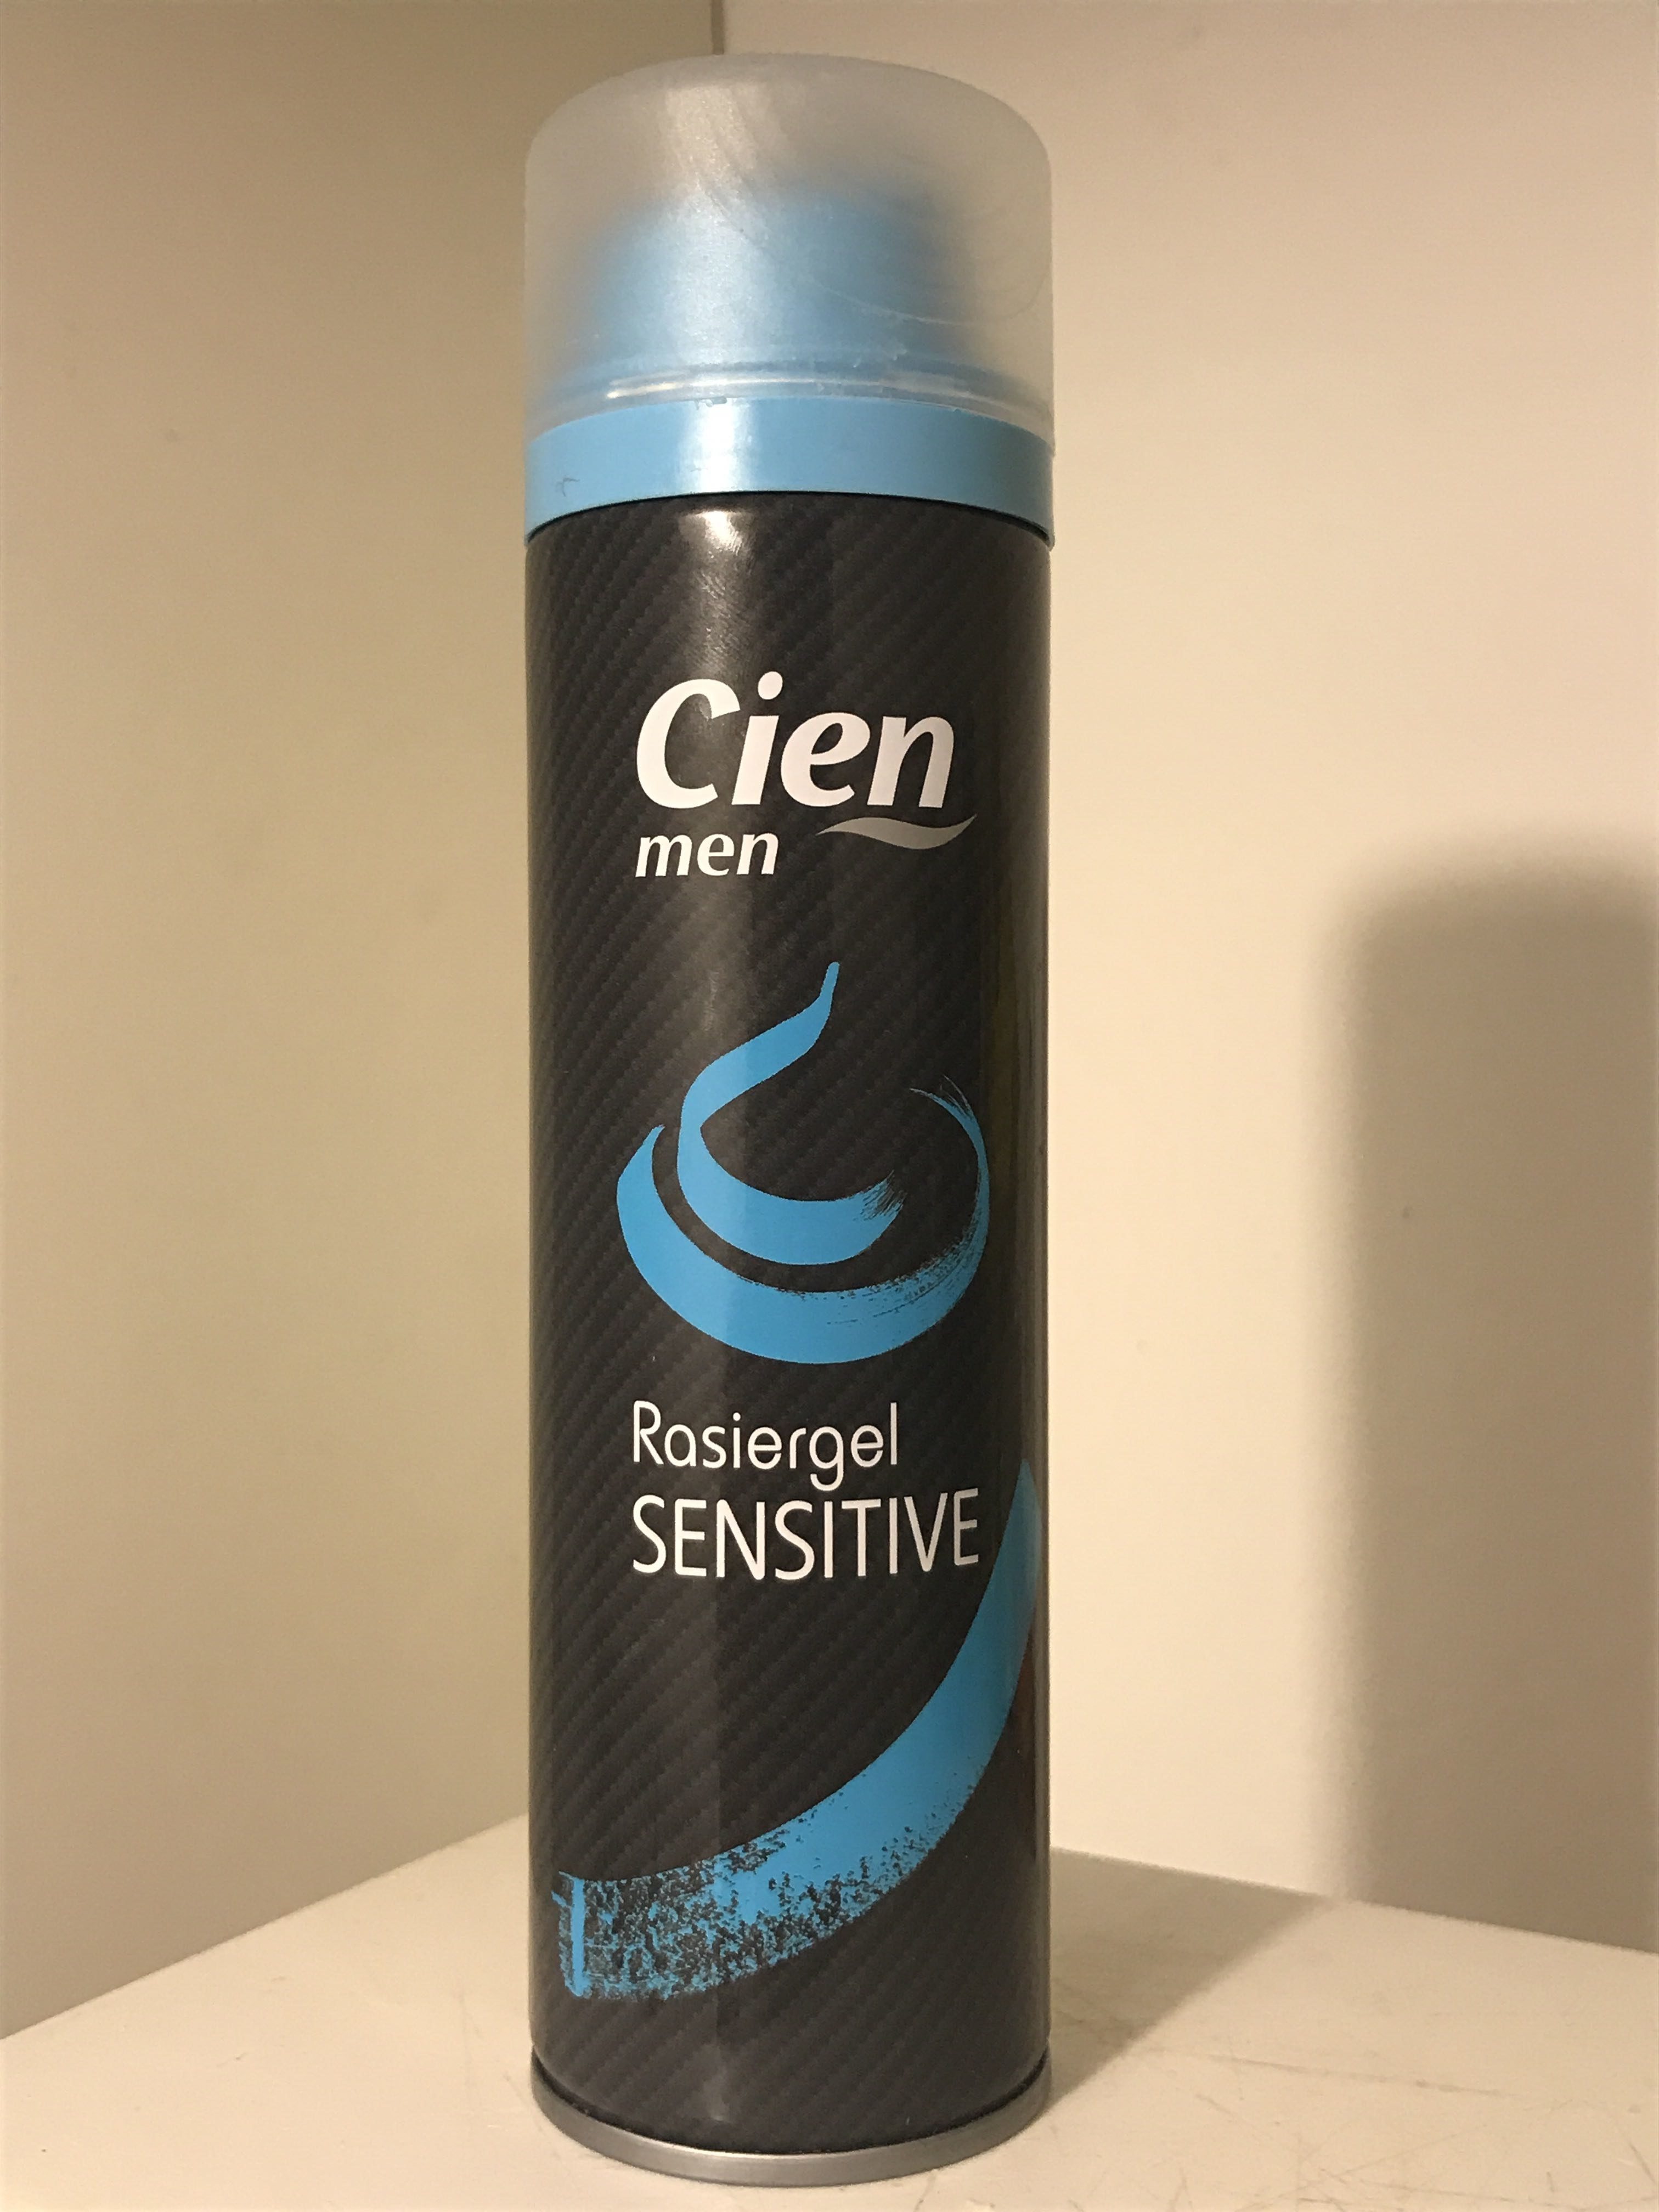 Rasiergel Sensitive - Produkt - es